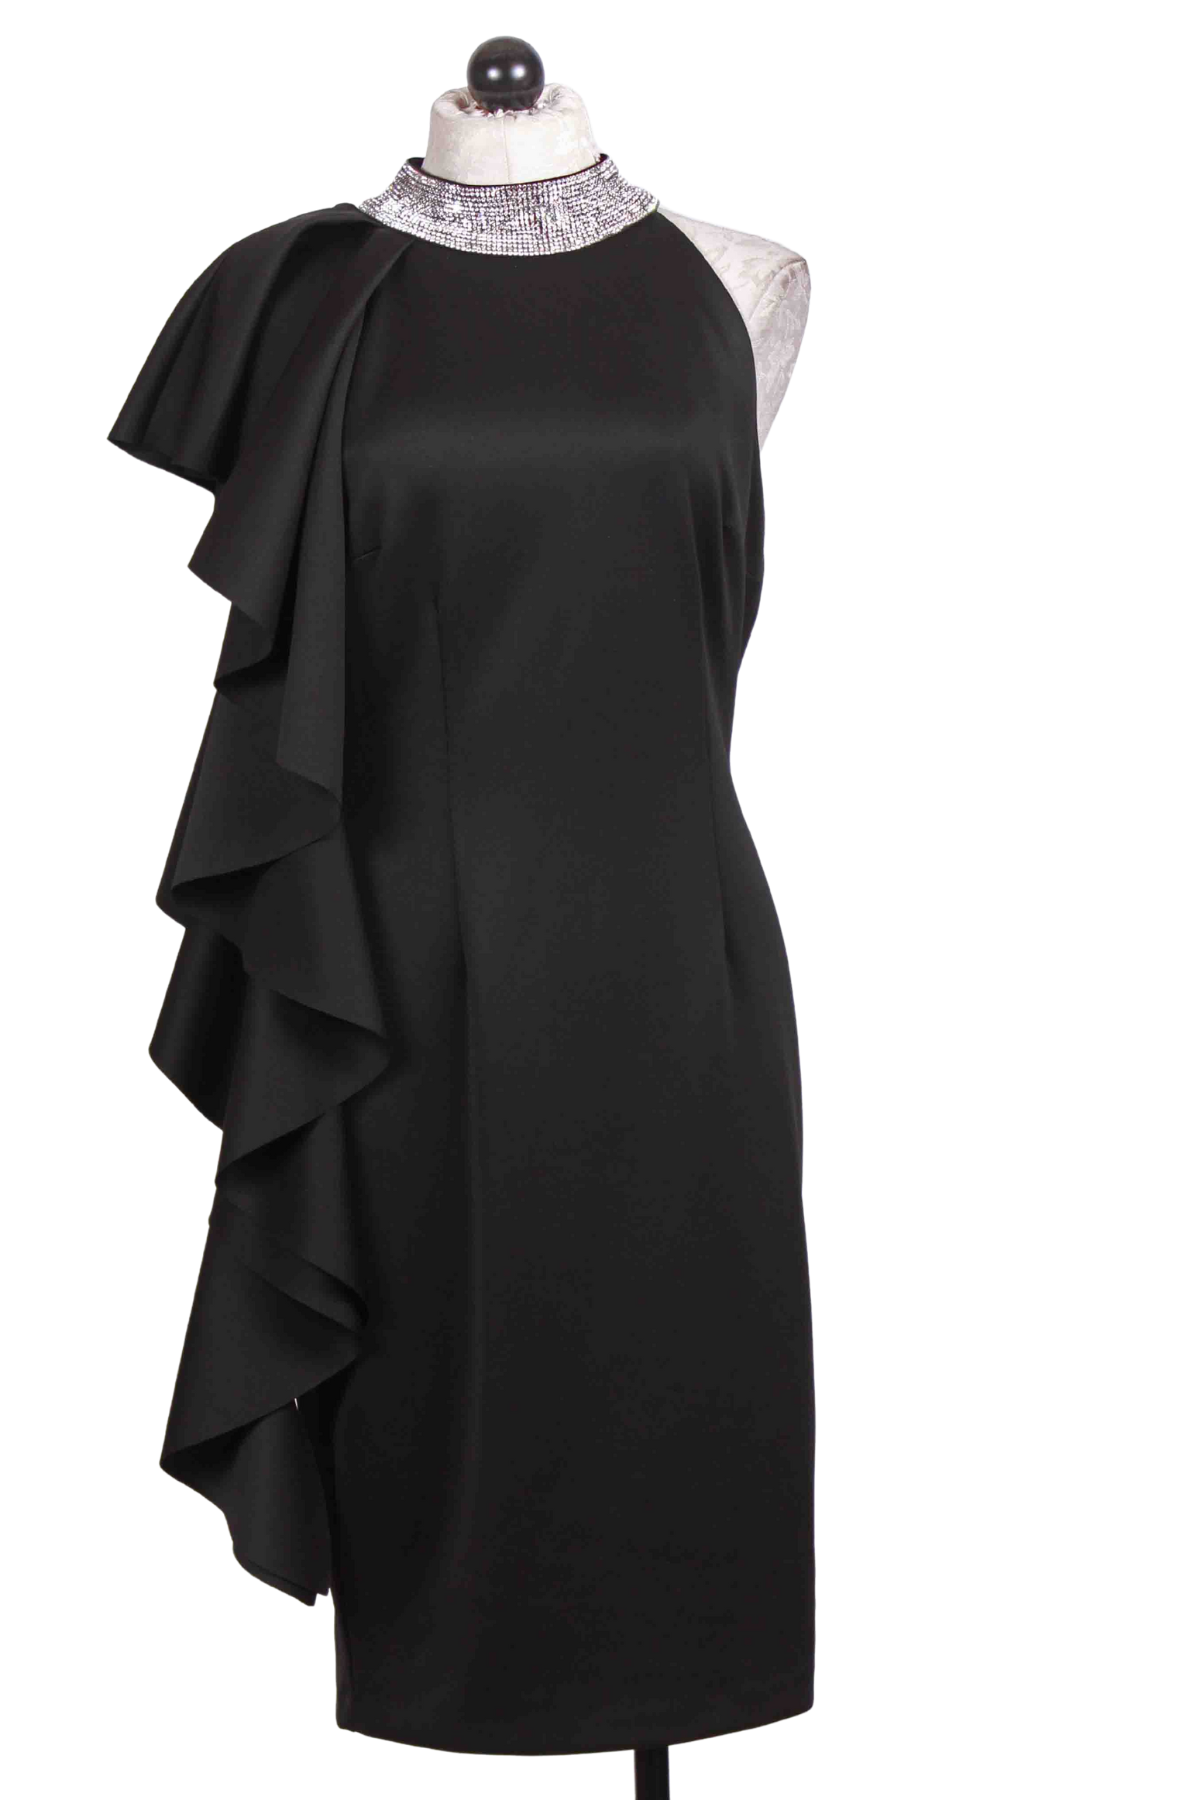 black Sleeveless Ruffle Sided Dress by Frank Lyman with Crystal studded Neck